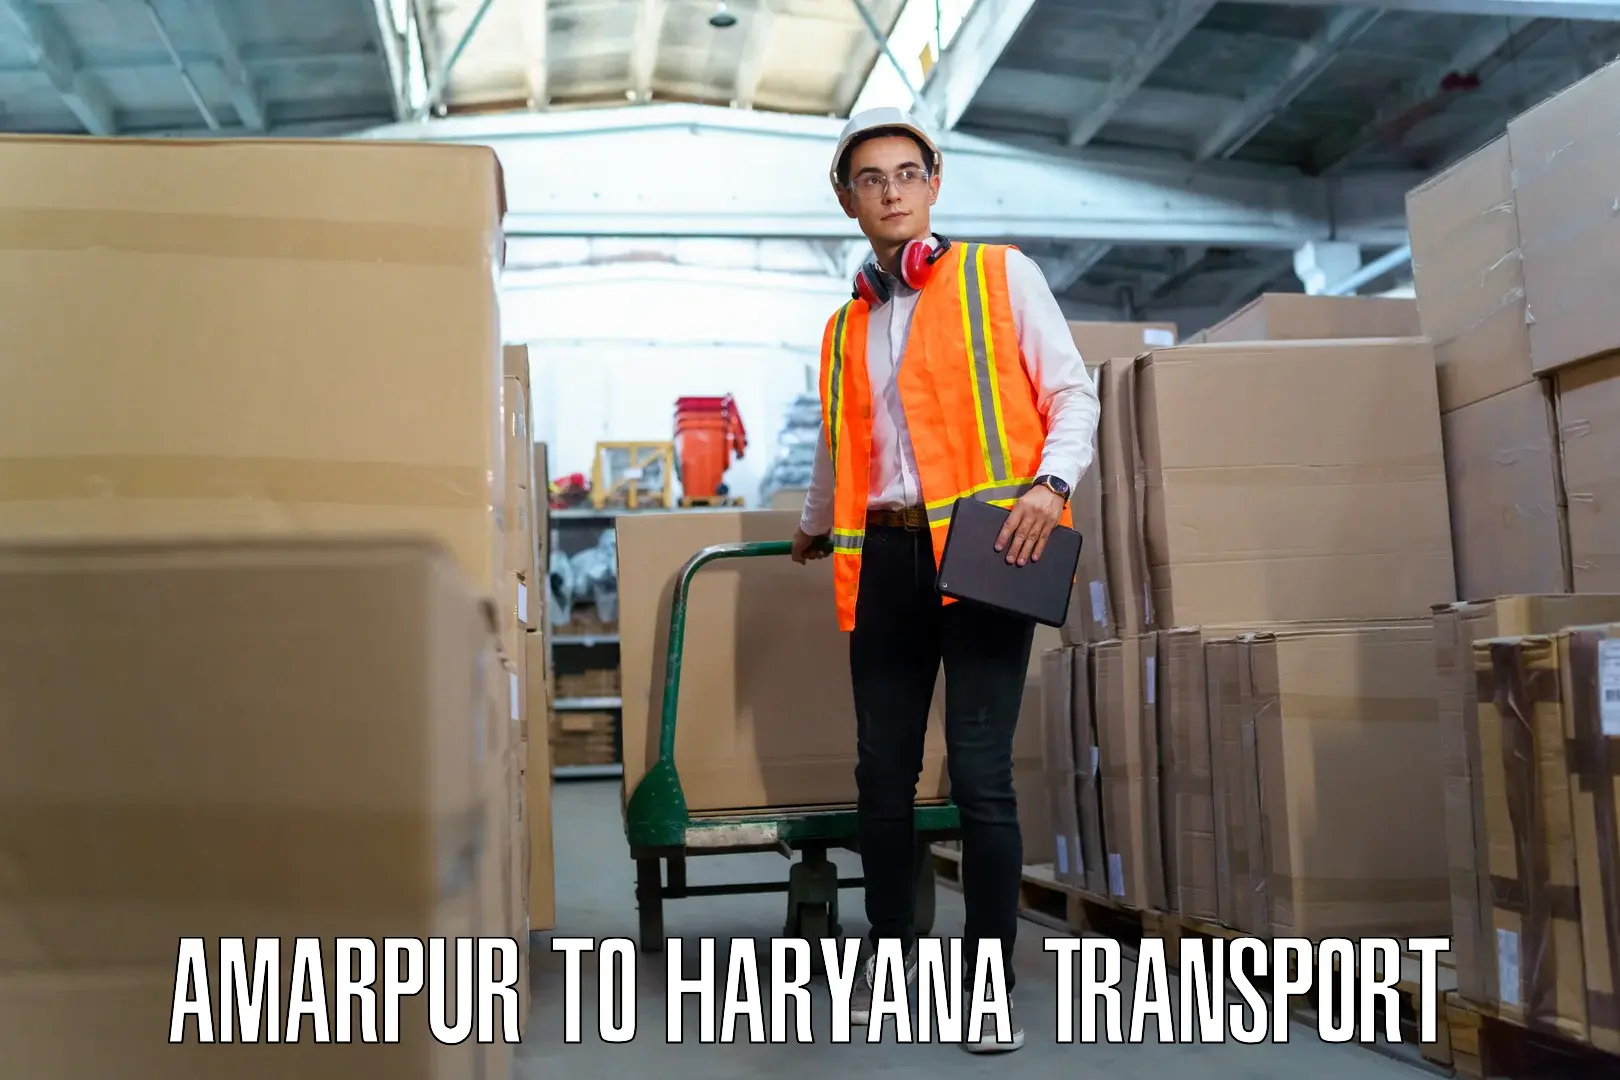 Truck transport companies in India Amarpur to Gurgaon